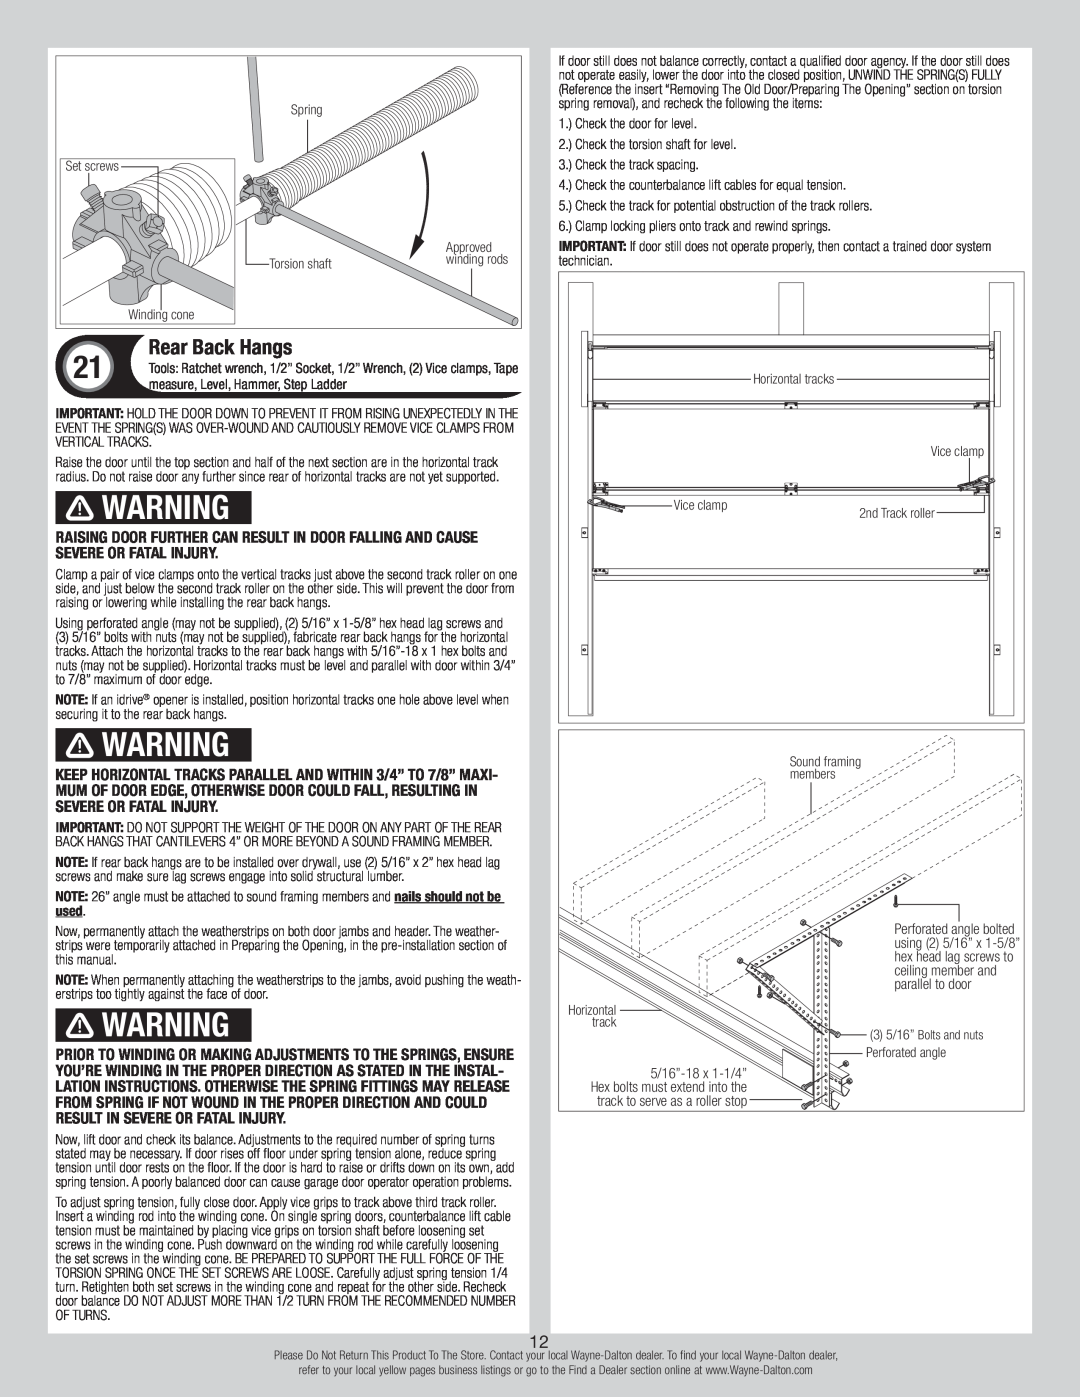 Wayne-Dalton 9800 installation instructions Rear Back Hangs 